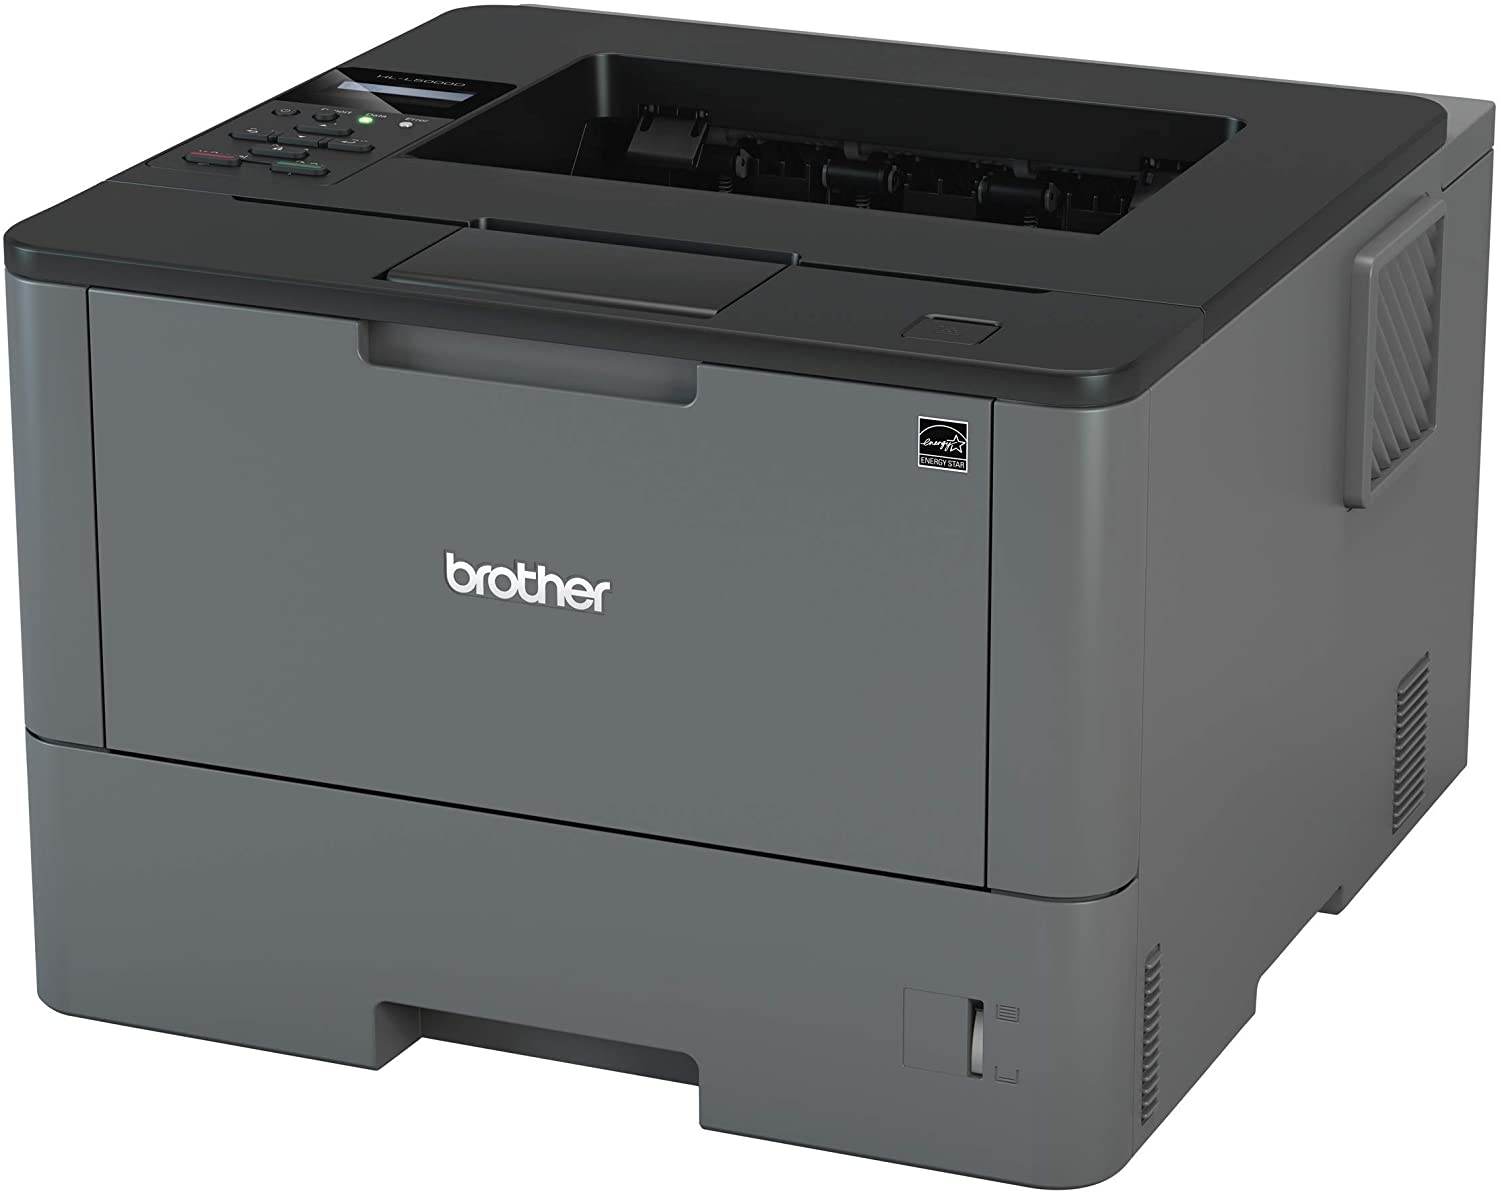 Brother HL-L5000D Imprimante laser professionnelle monochrome avec impression recto verso